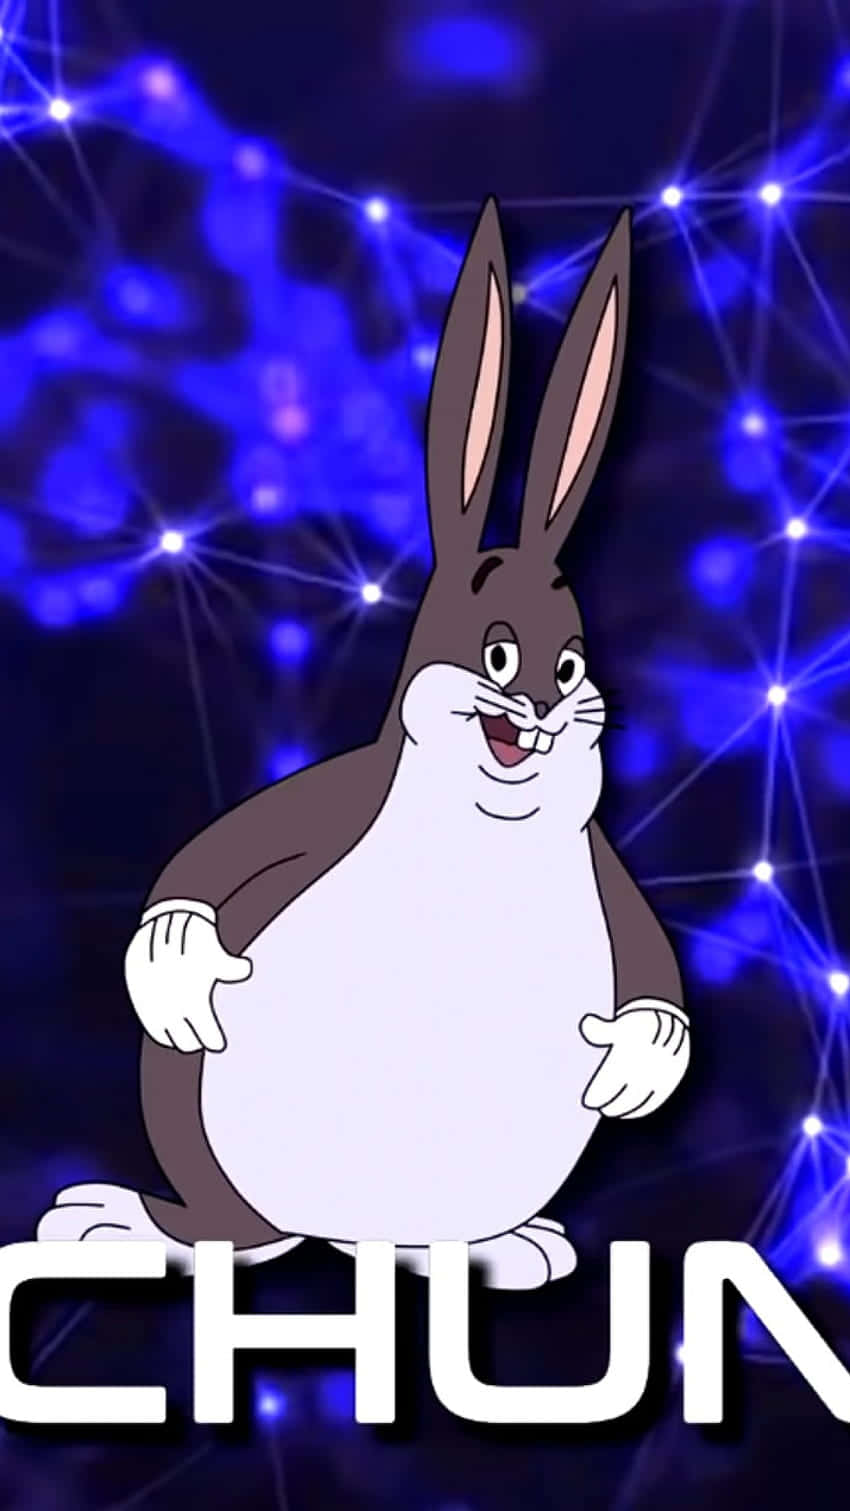 A Cartoon Rabbit With The Word Chun On It